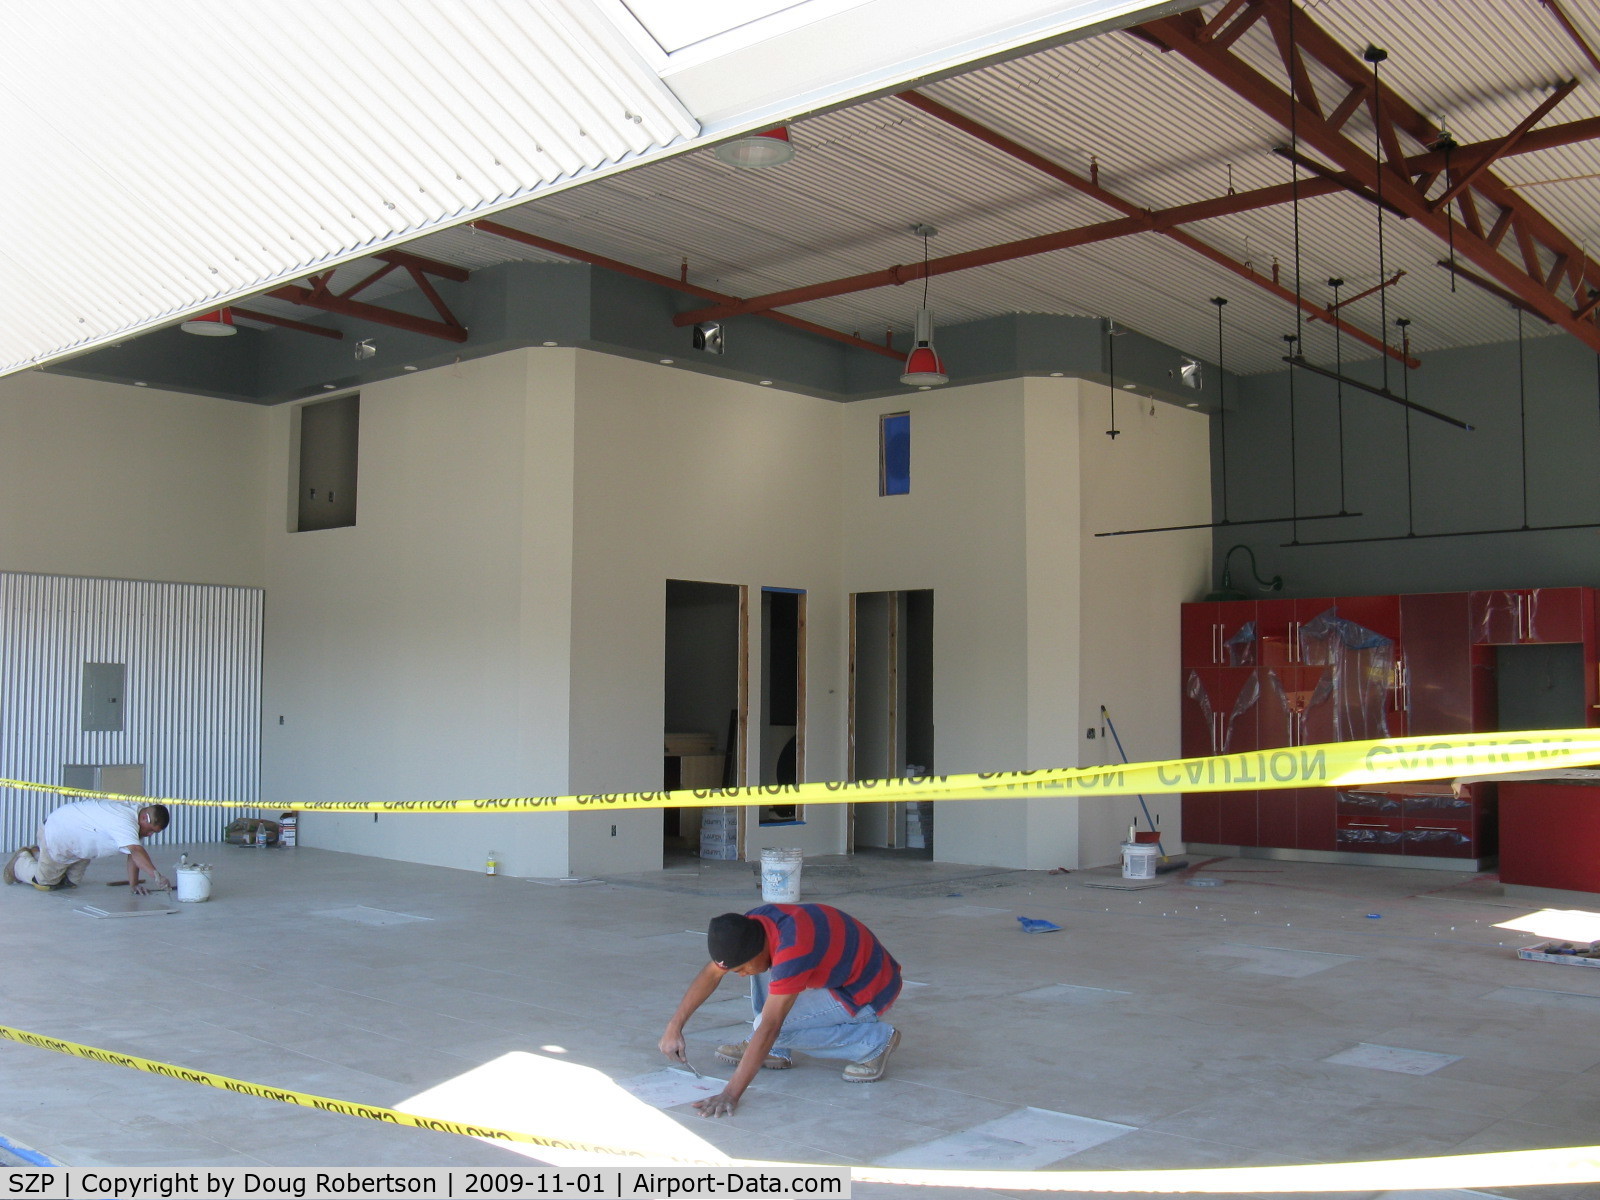 Santa Paula Airport (SZP) - 32 Curtiss Taxi-New hangar under construction. Tile floor installation.